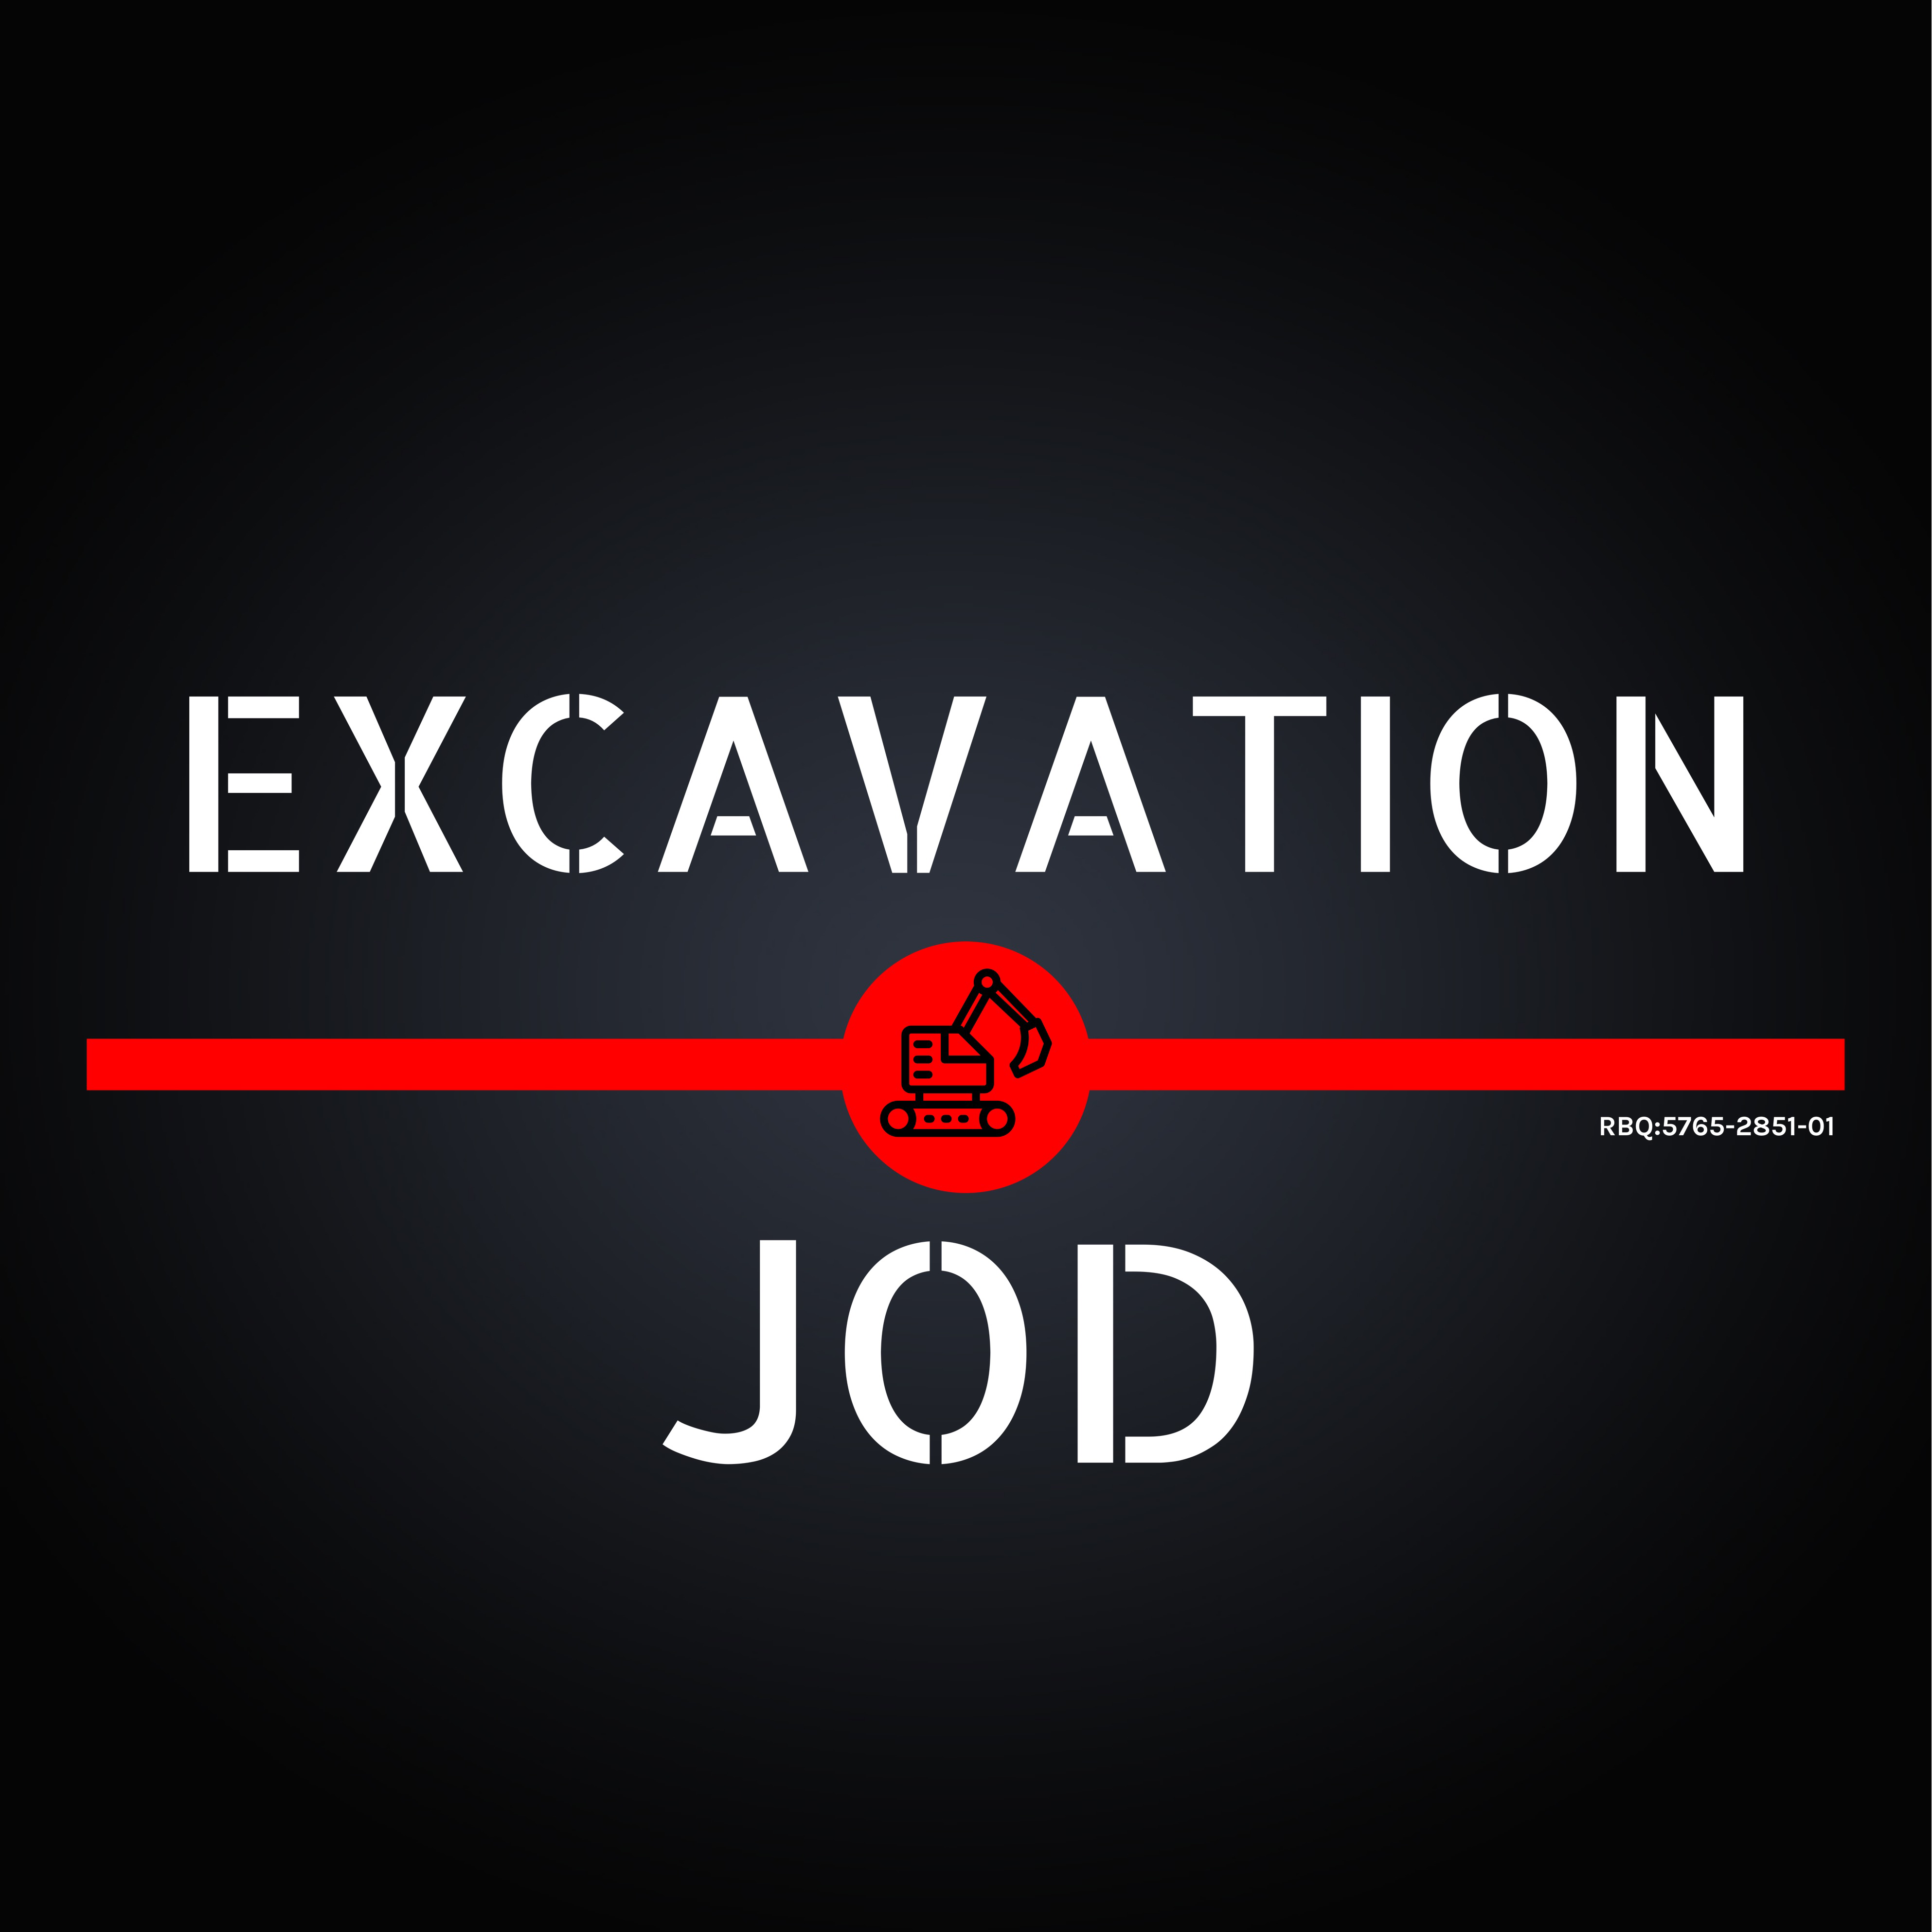 EXCAVATION JOD INC.